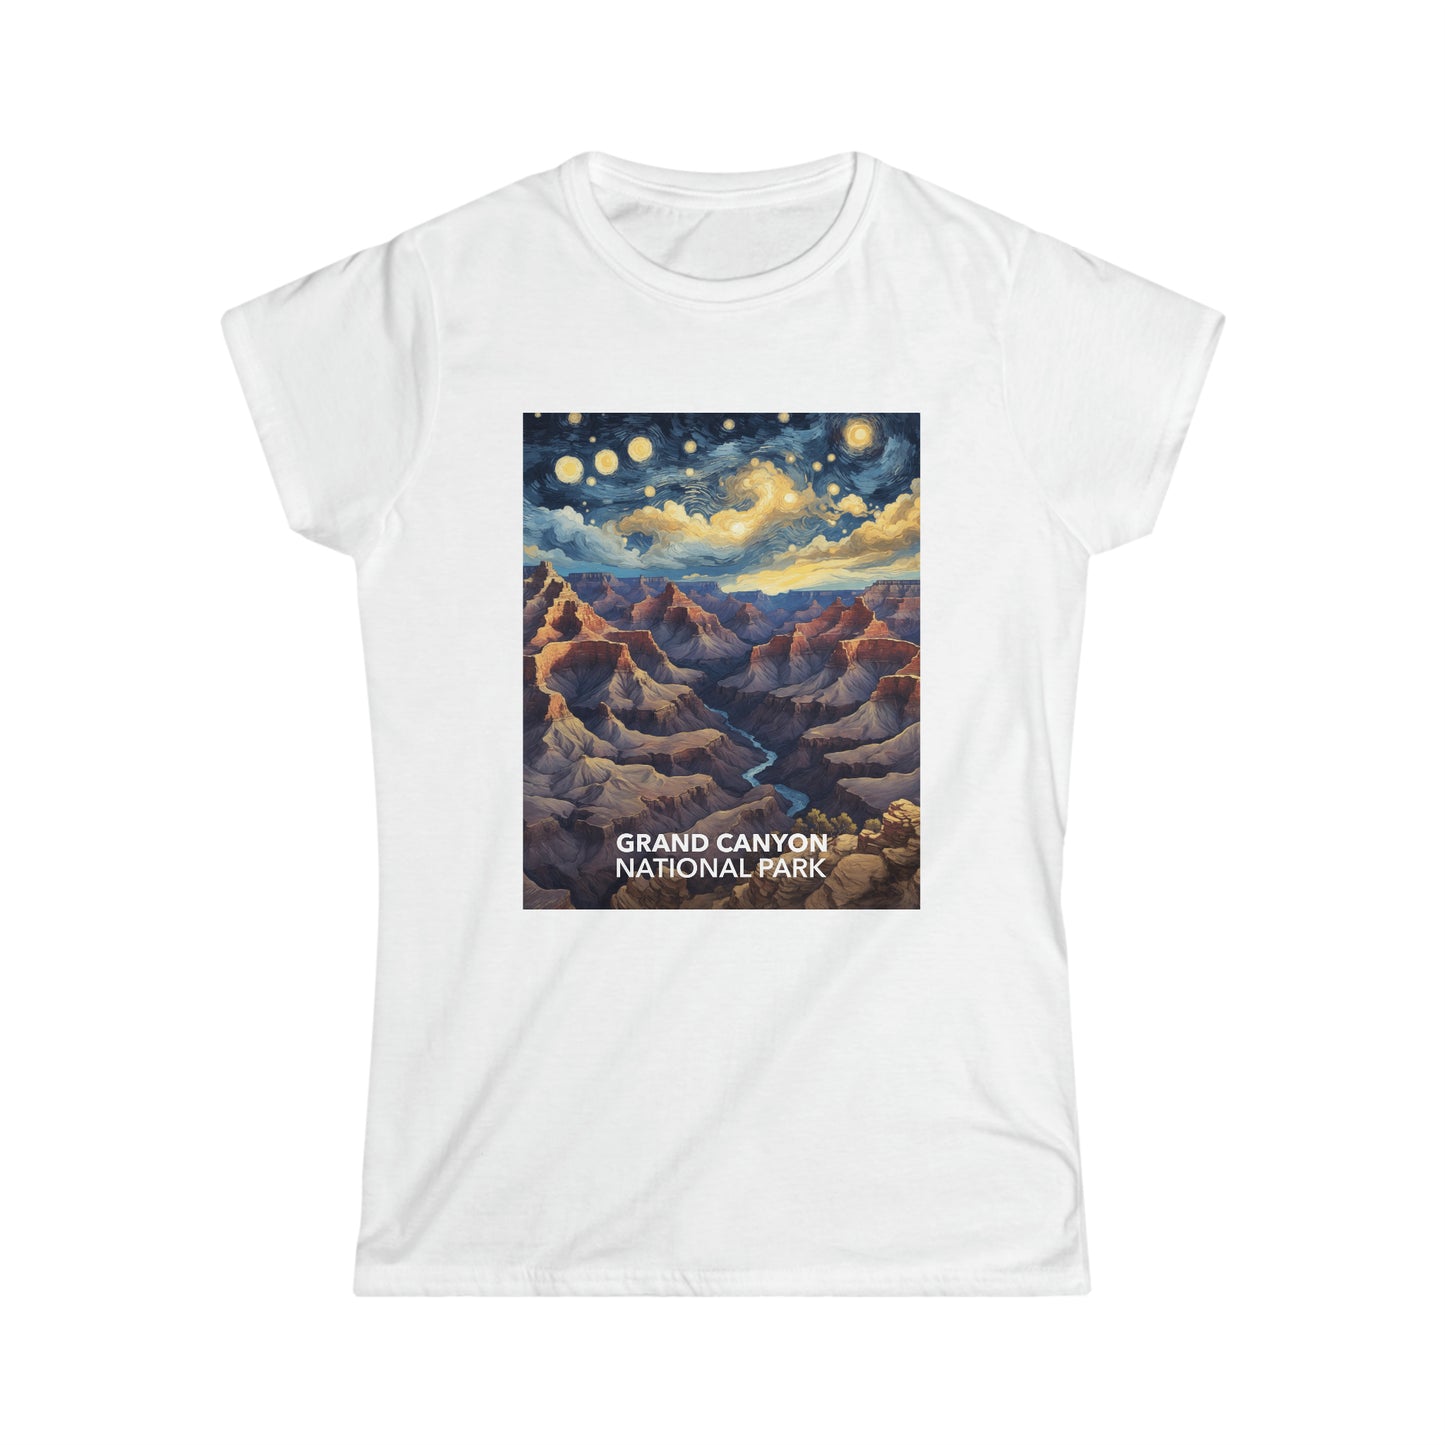 Grand Canyon National Park T-Shirt - Women's Starry Night